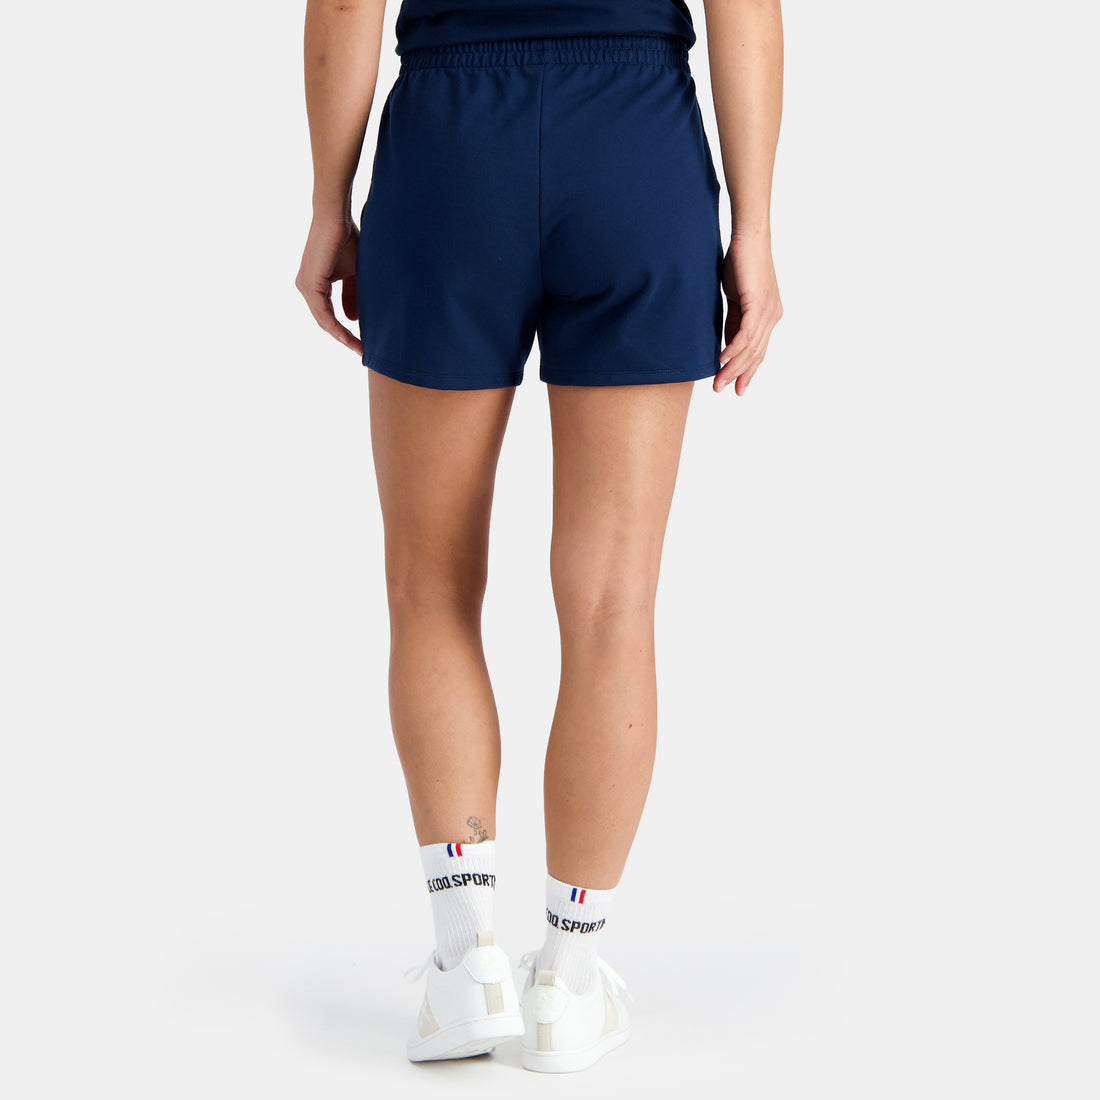 Coq Sportif Women's Sports Bra with Cup Half Top & Shorts Set, navy, 2L :  : Fashion